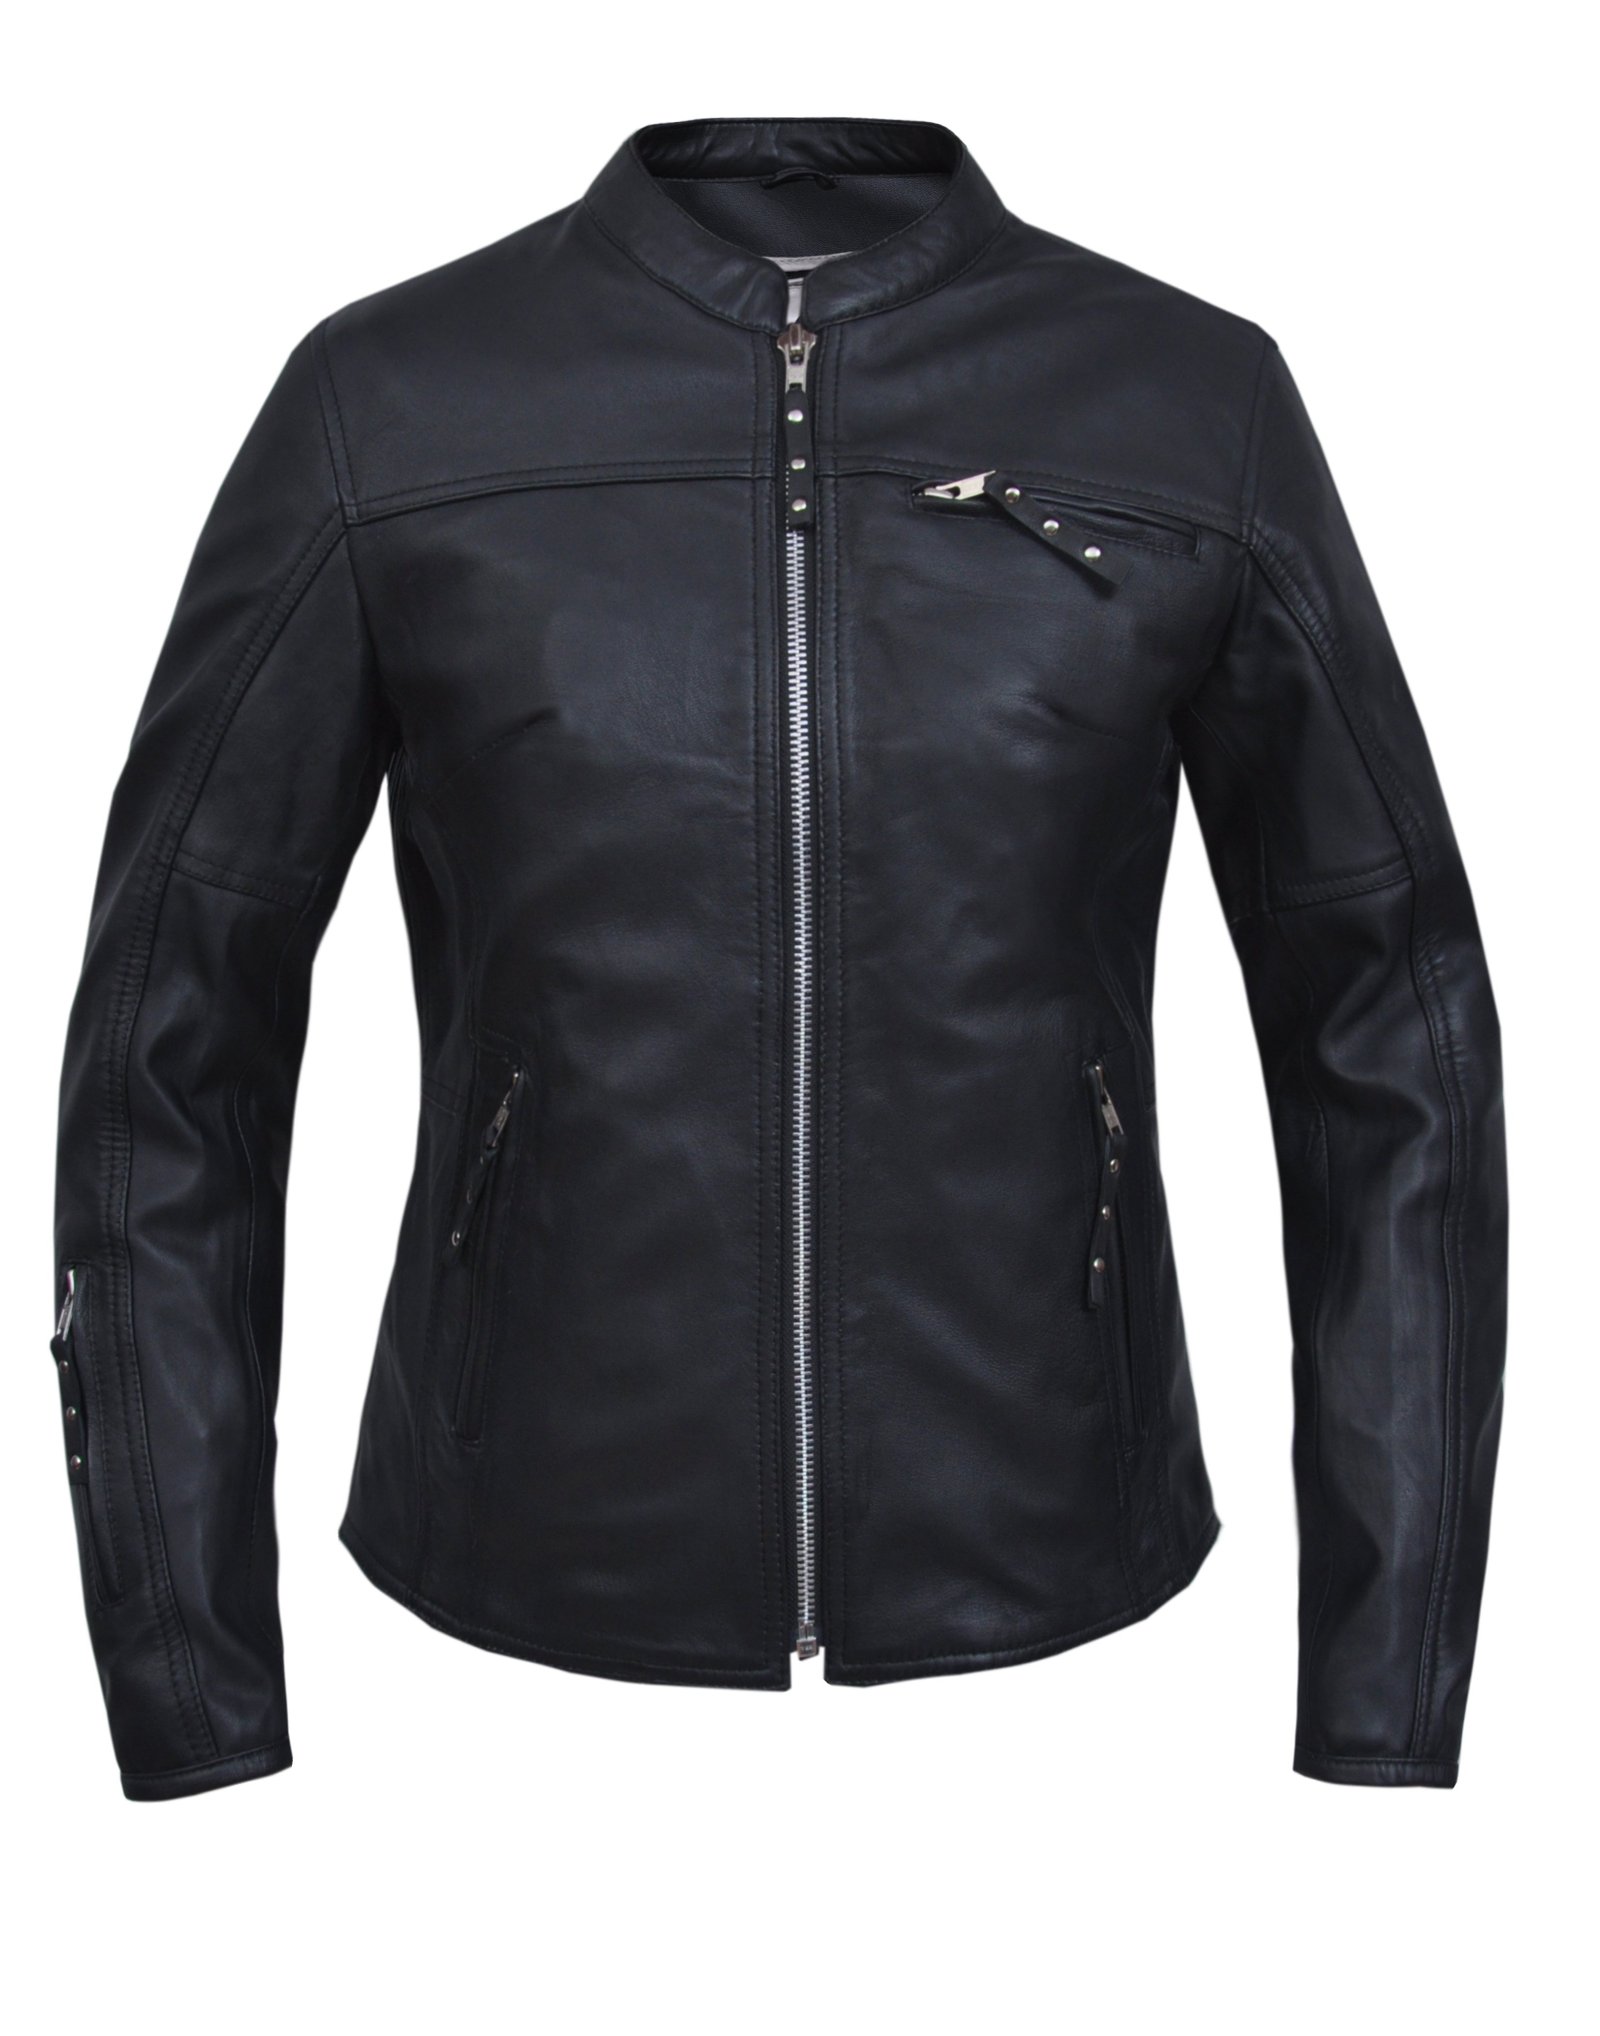 UNIK Ladies Premium Lambskin Leather Racer Jacket With Reinforcement - 6843-00-UN